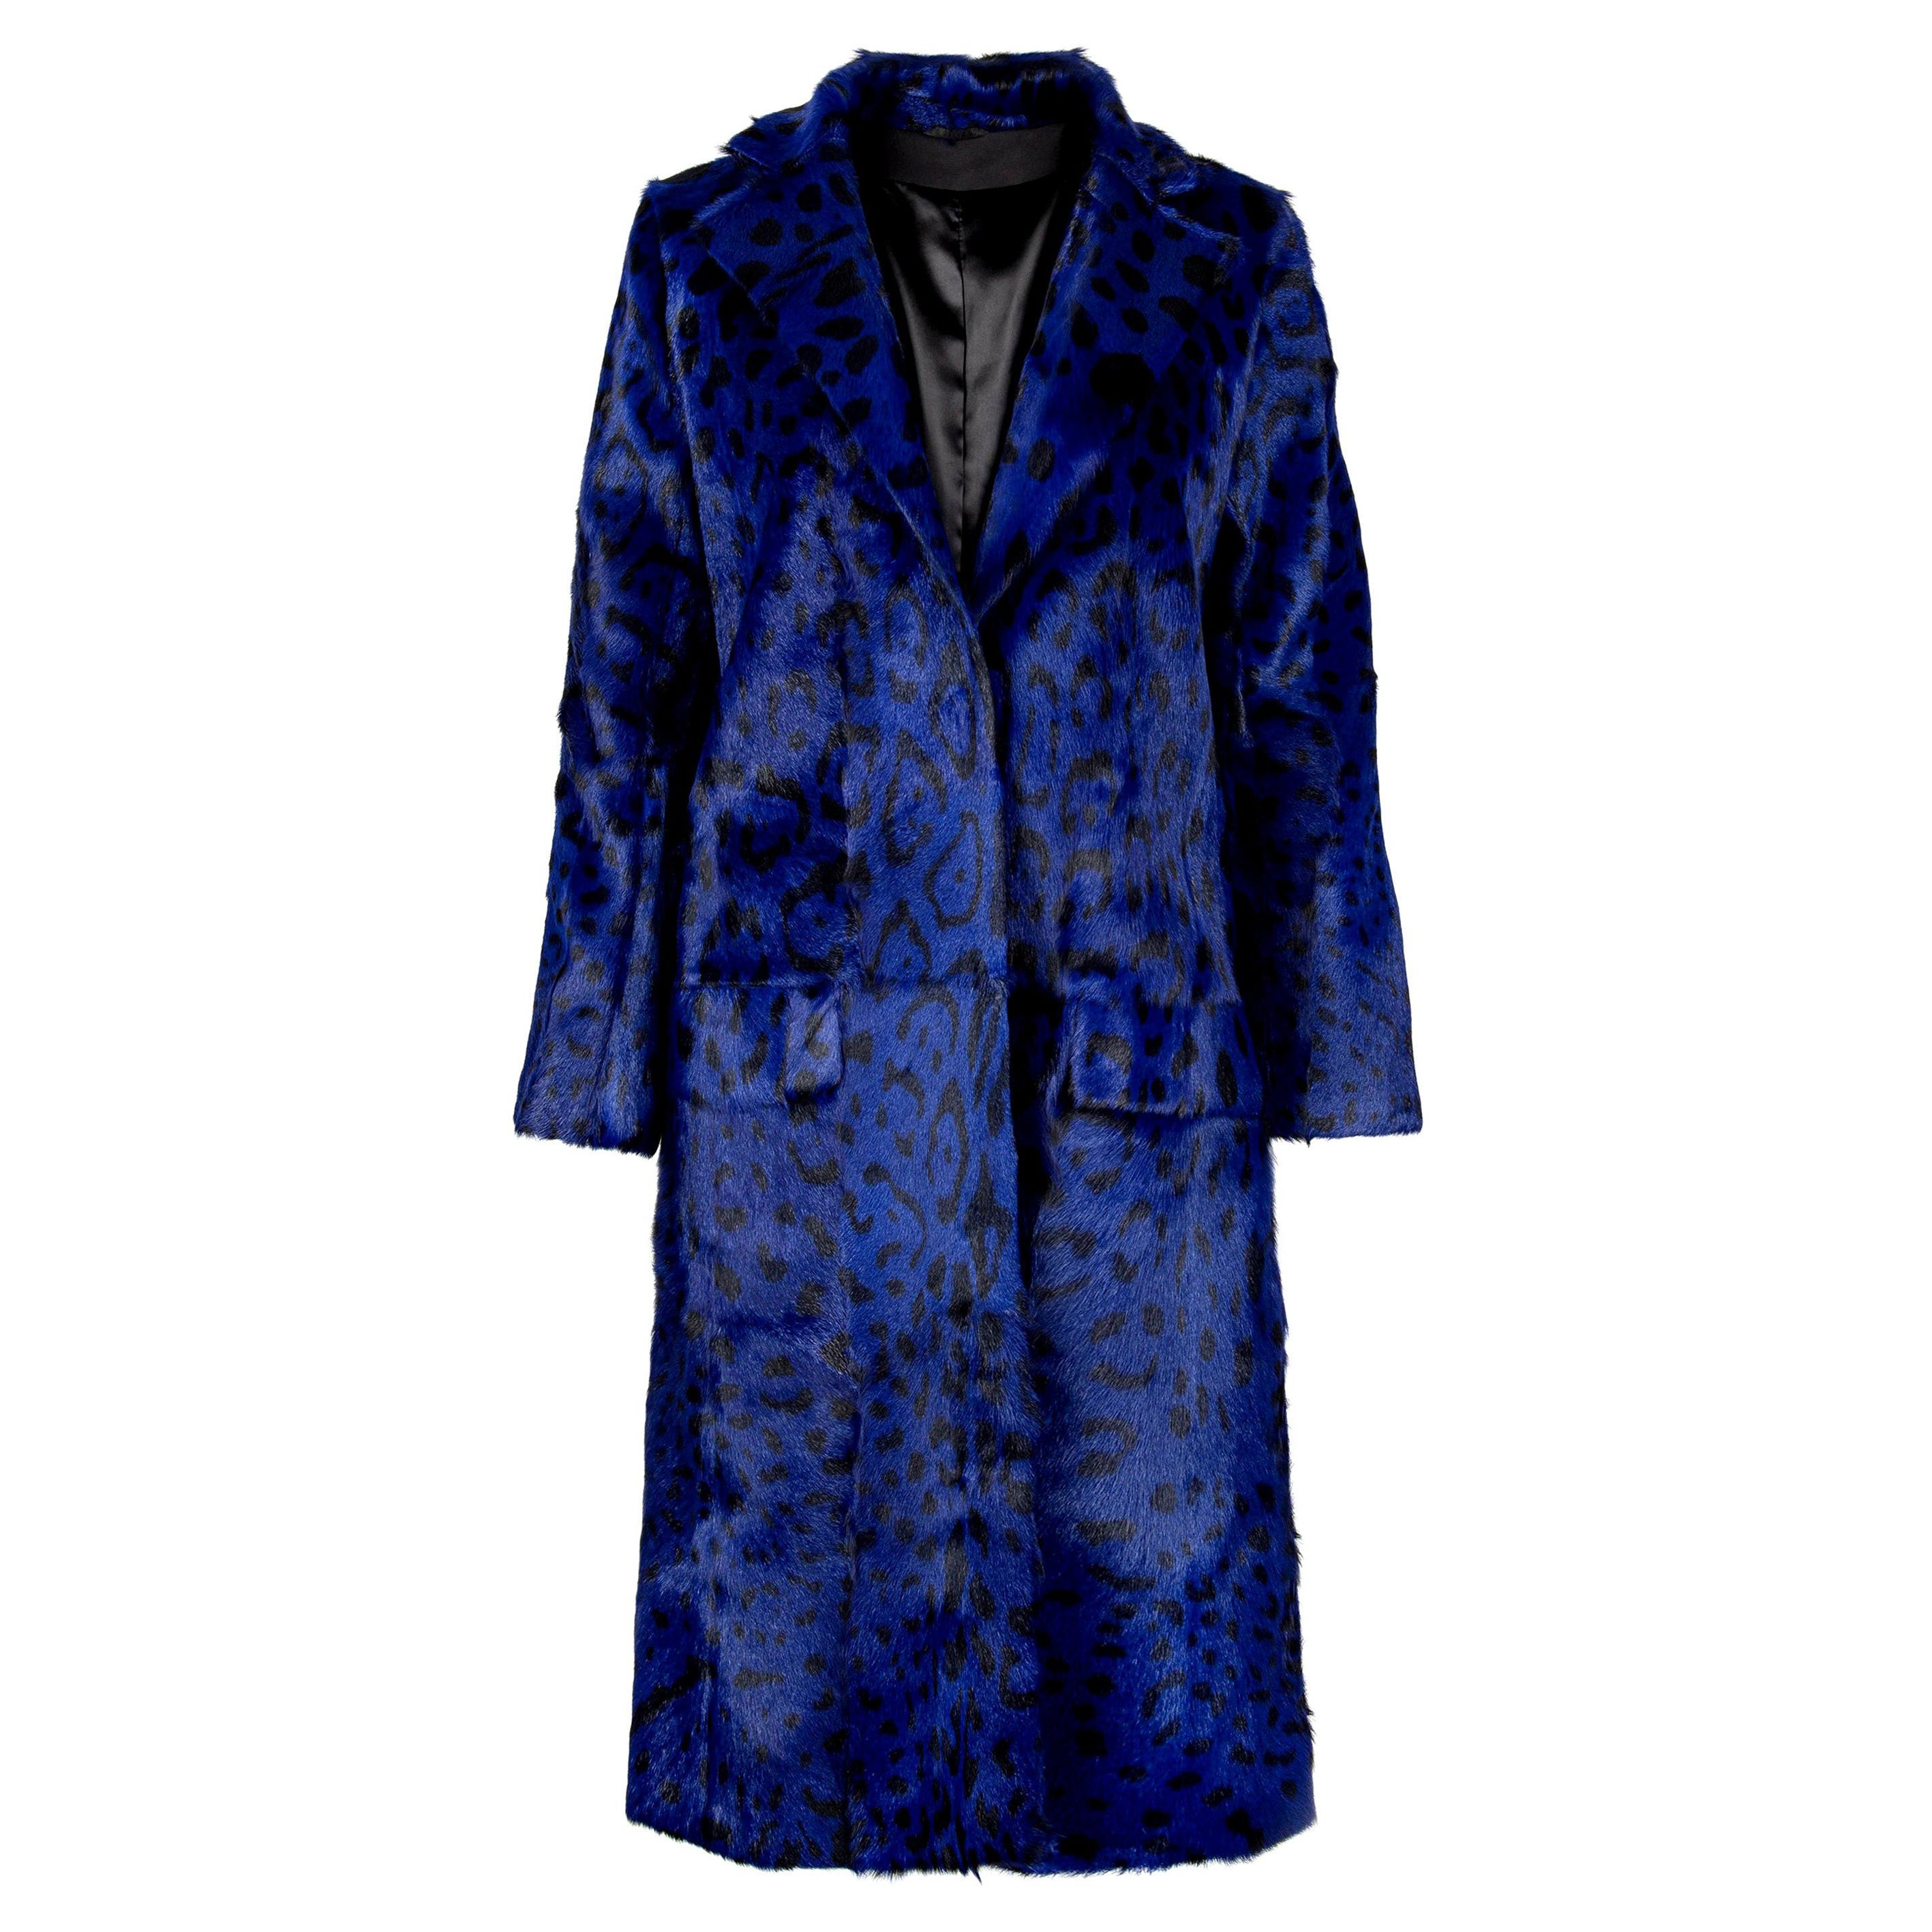 Verheyen London Ink Blue Leopard Print Coat in Goat Hair Fur UK 10  For Sale